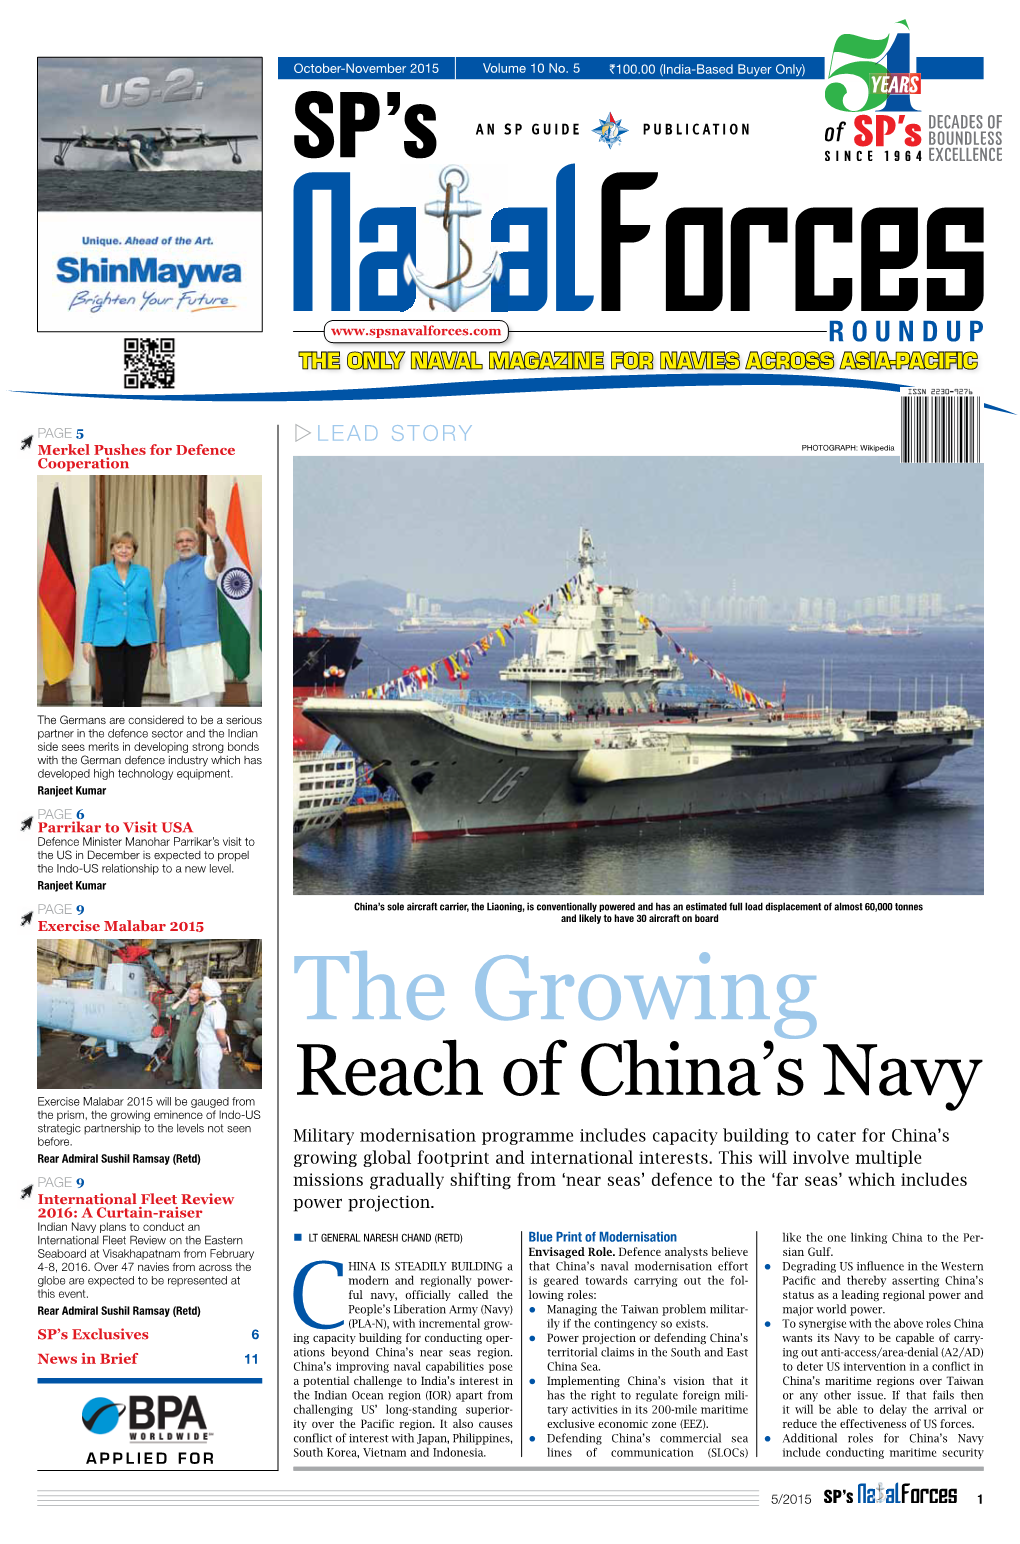 Reach of China's Navy